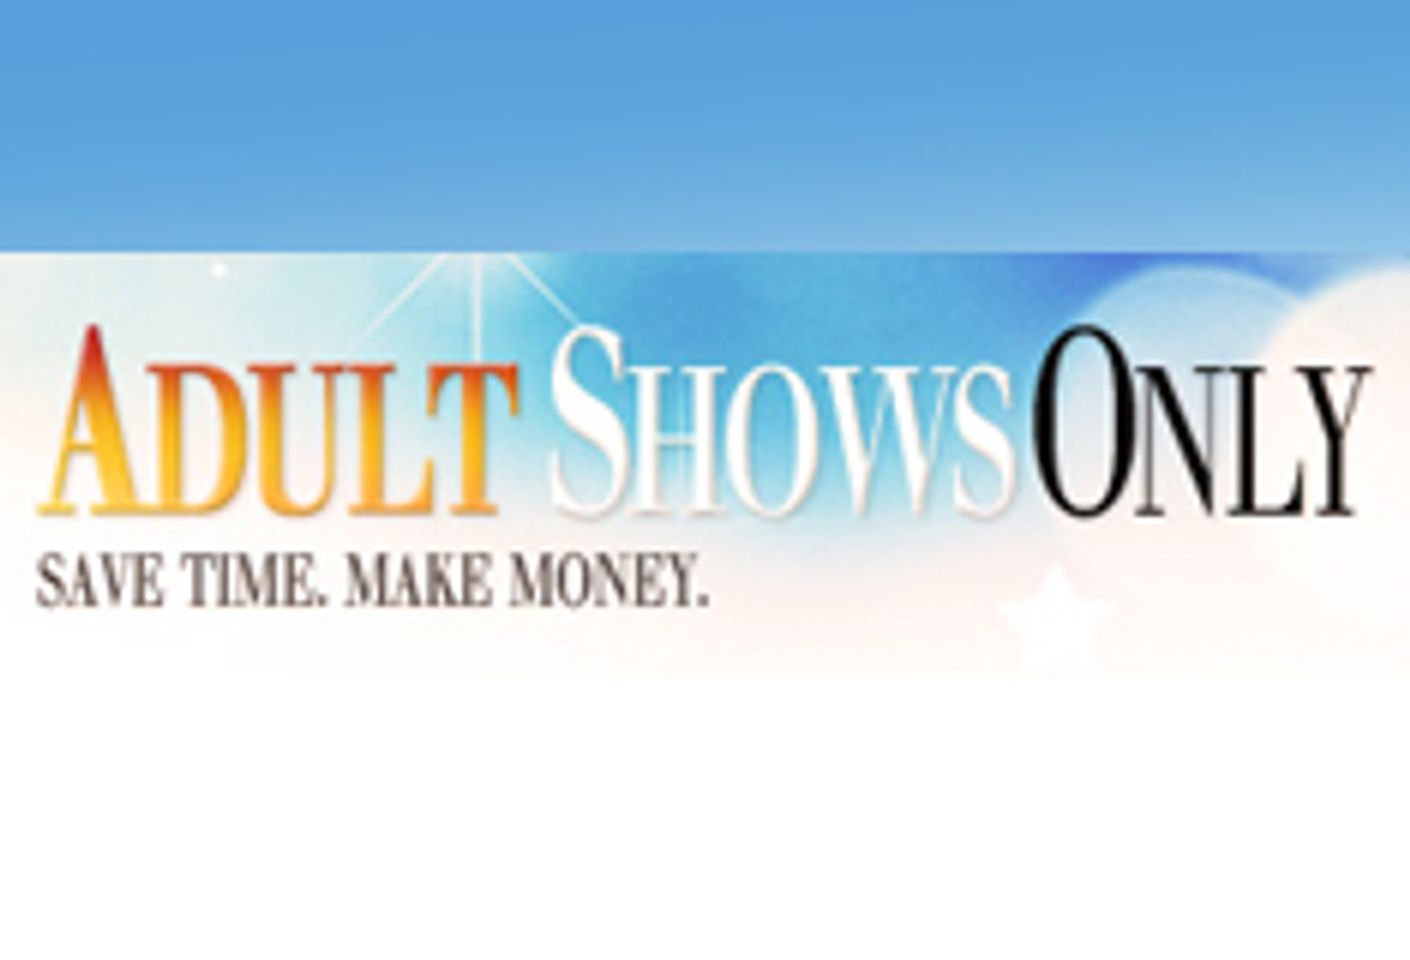 AdultShowsOnly.com Welcomes FUBAR